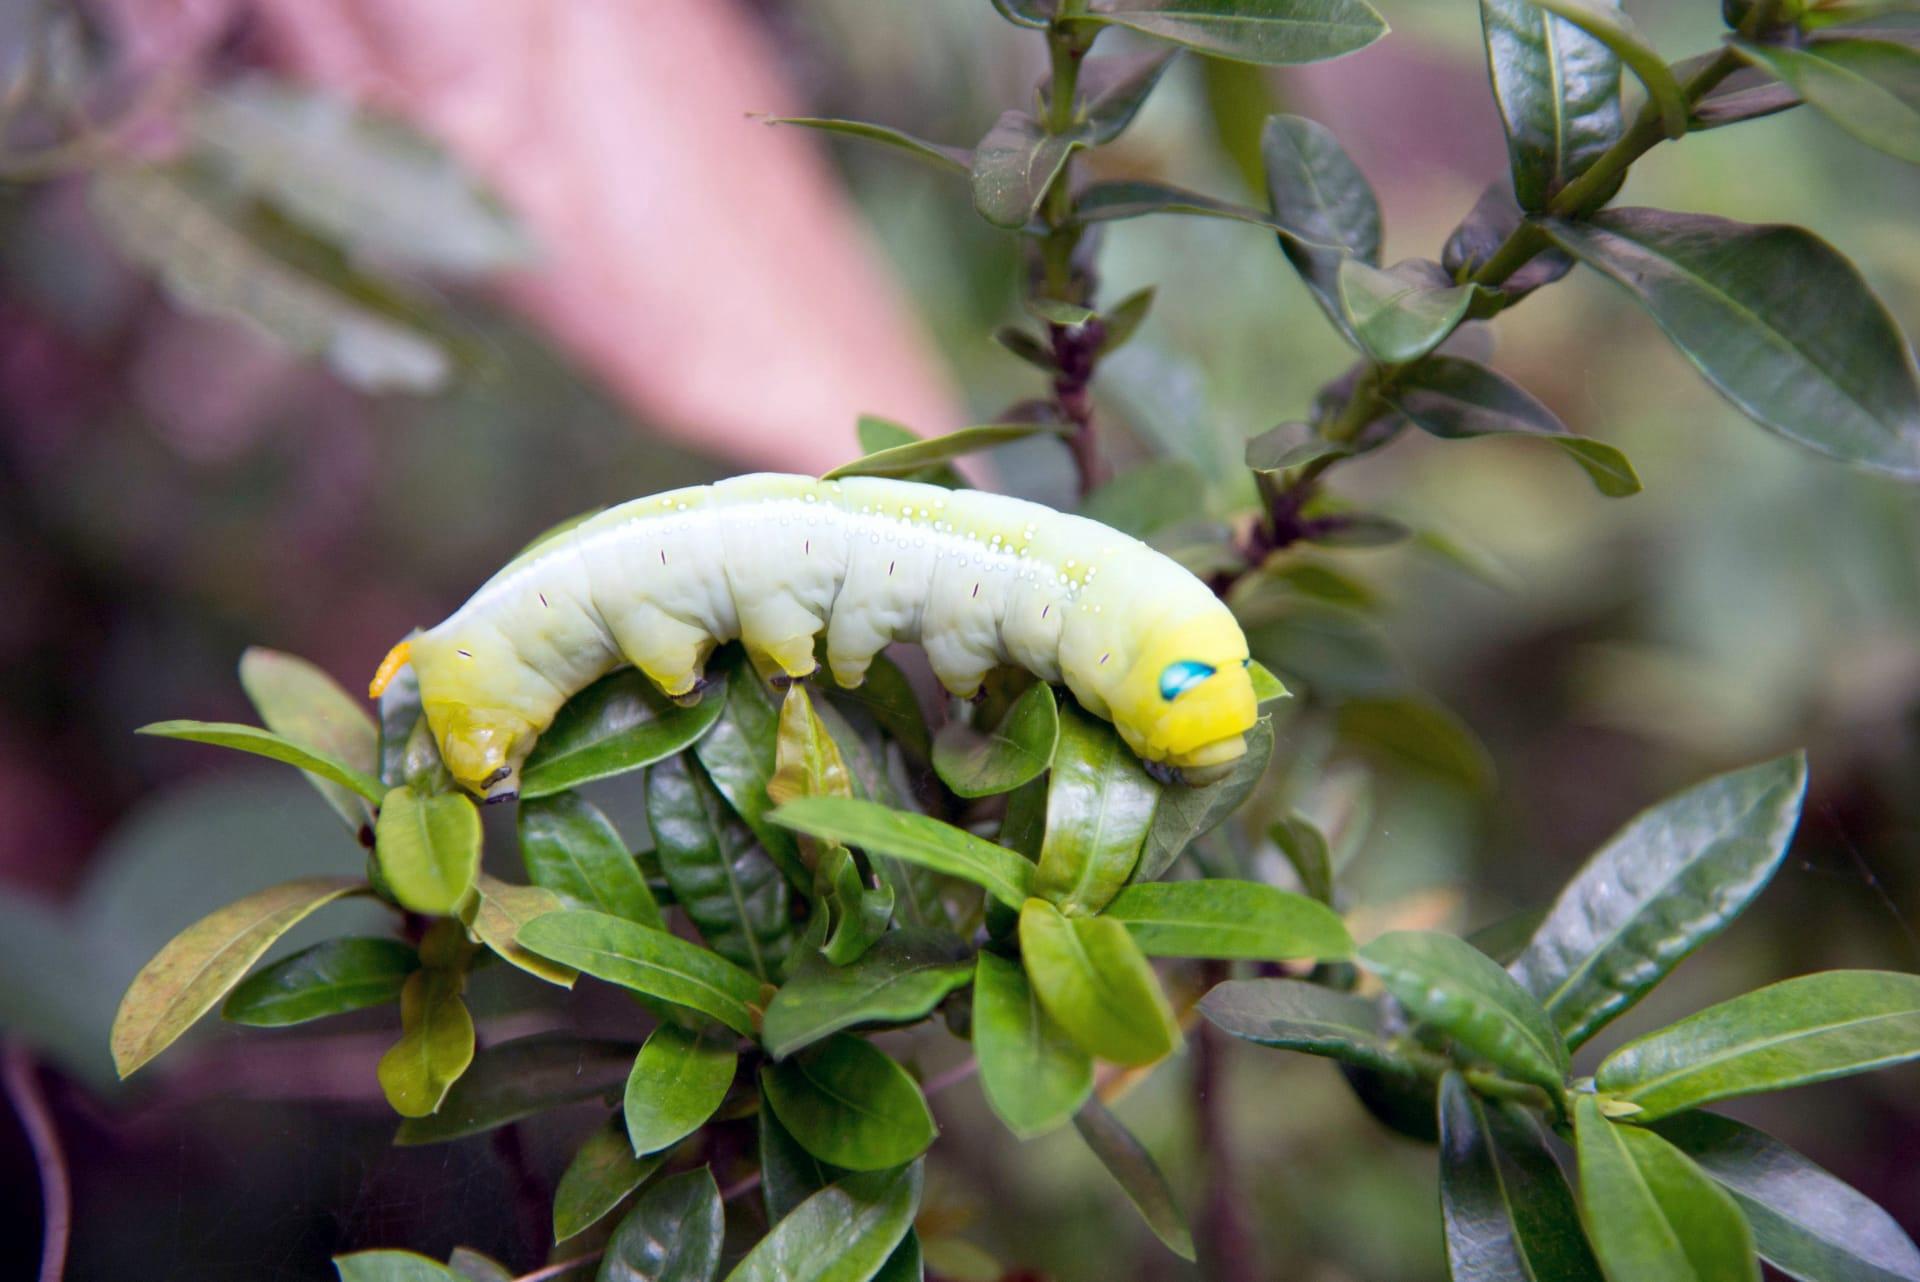 Green caterpillar pictures